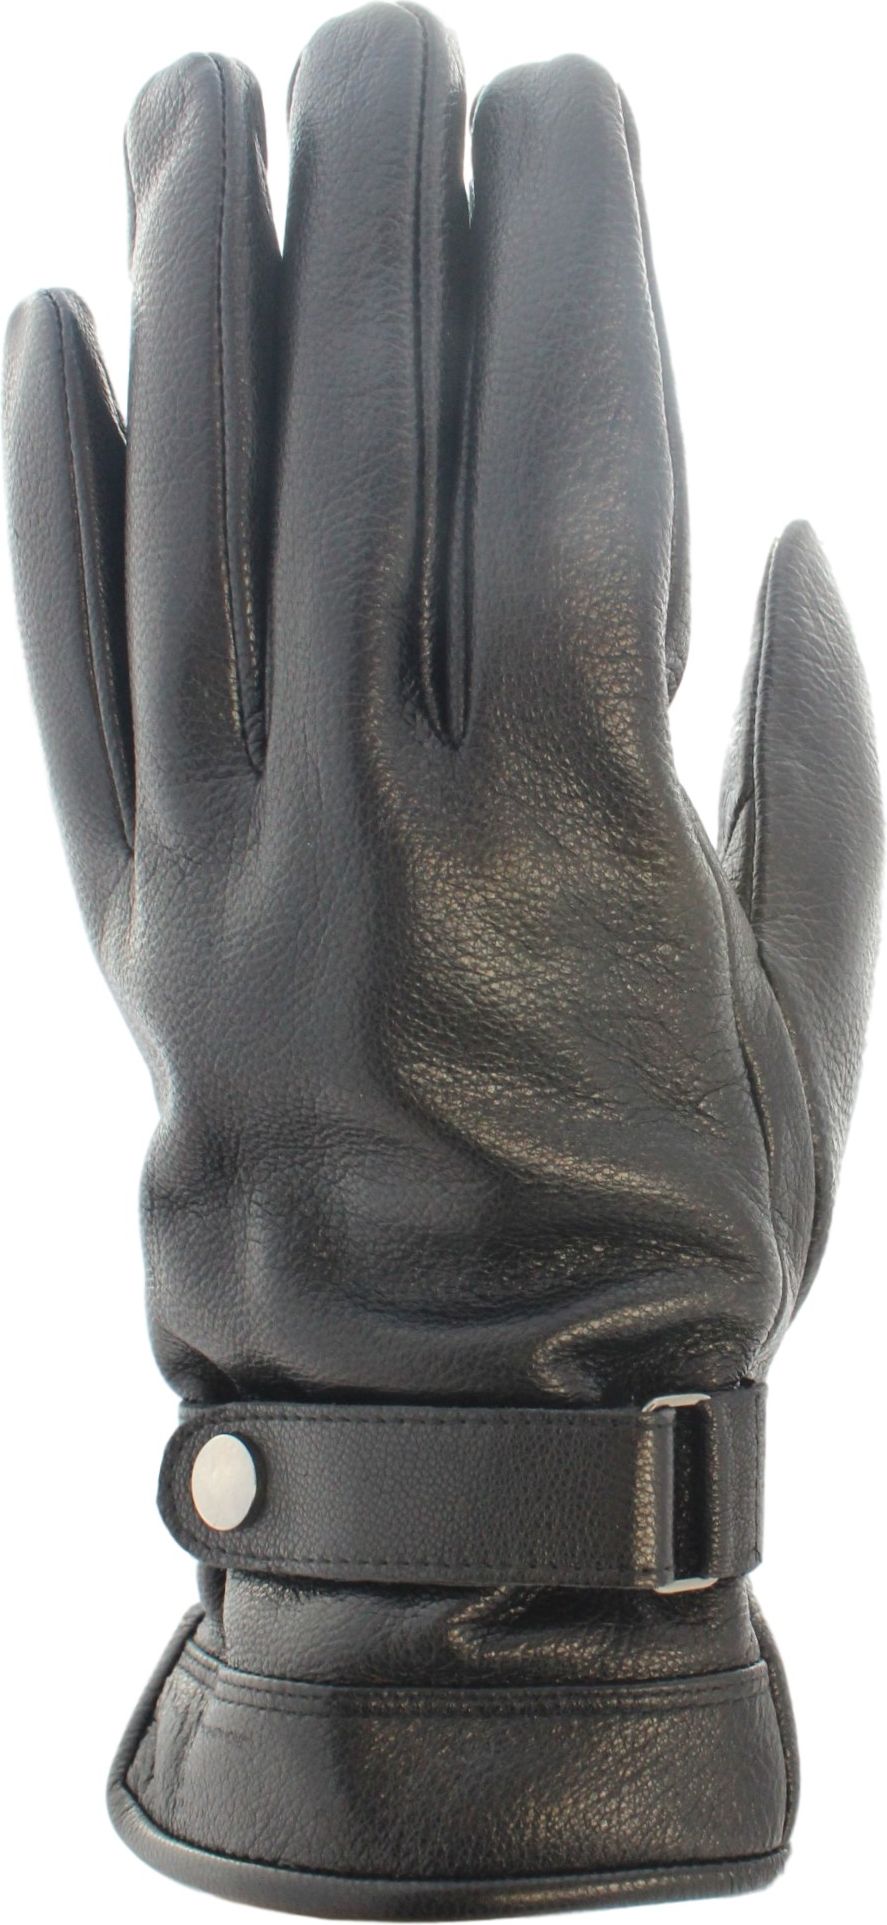 Sterling Glove Accessories Goatskin Glove Strap Gun Metal Snap Terry Lined Black